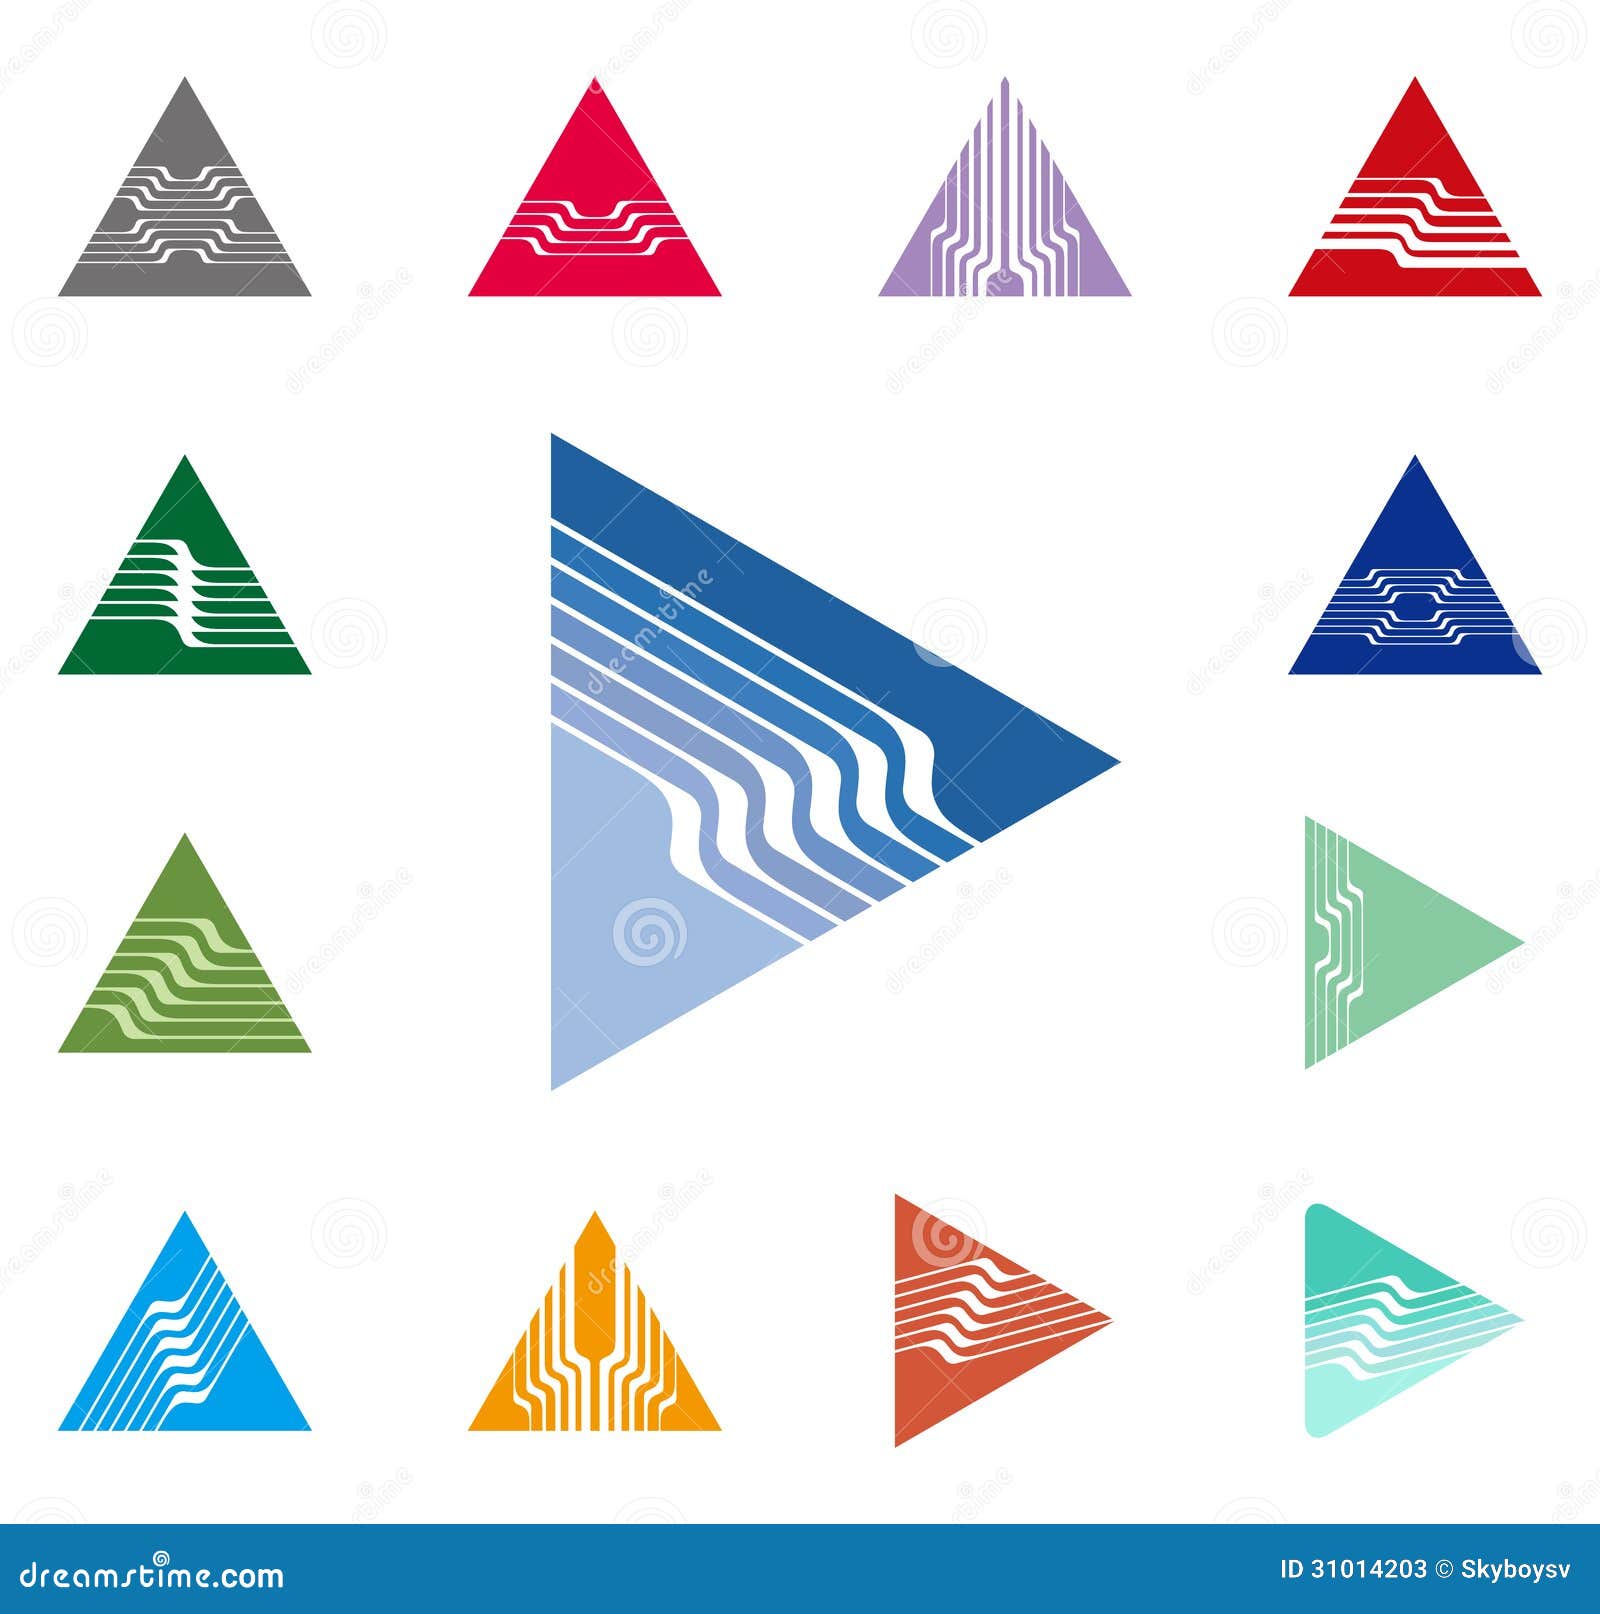 Design Triangle, Arrow Vector Logo Template. Speed Stock Photos - Image ...